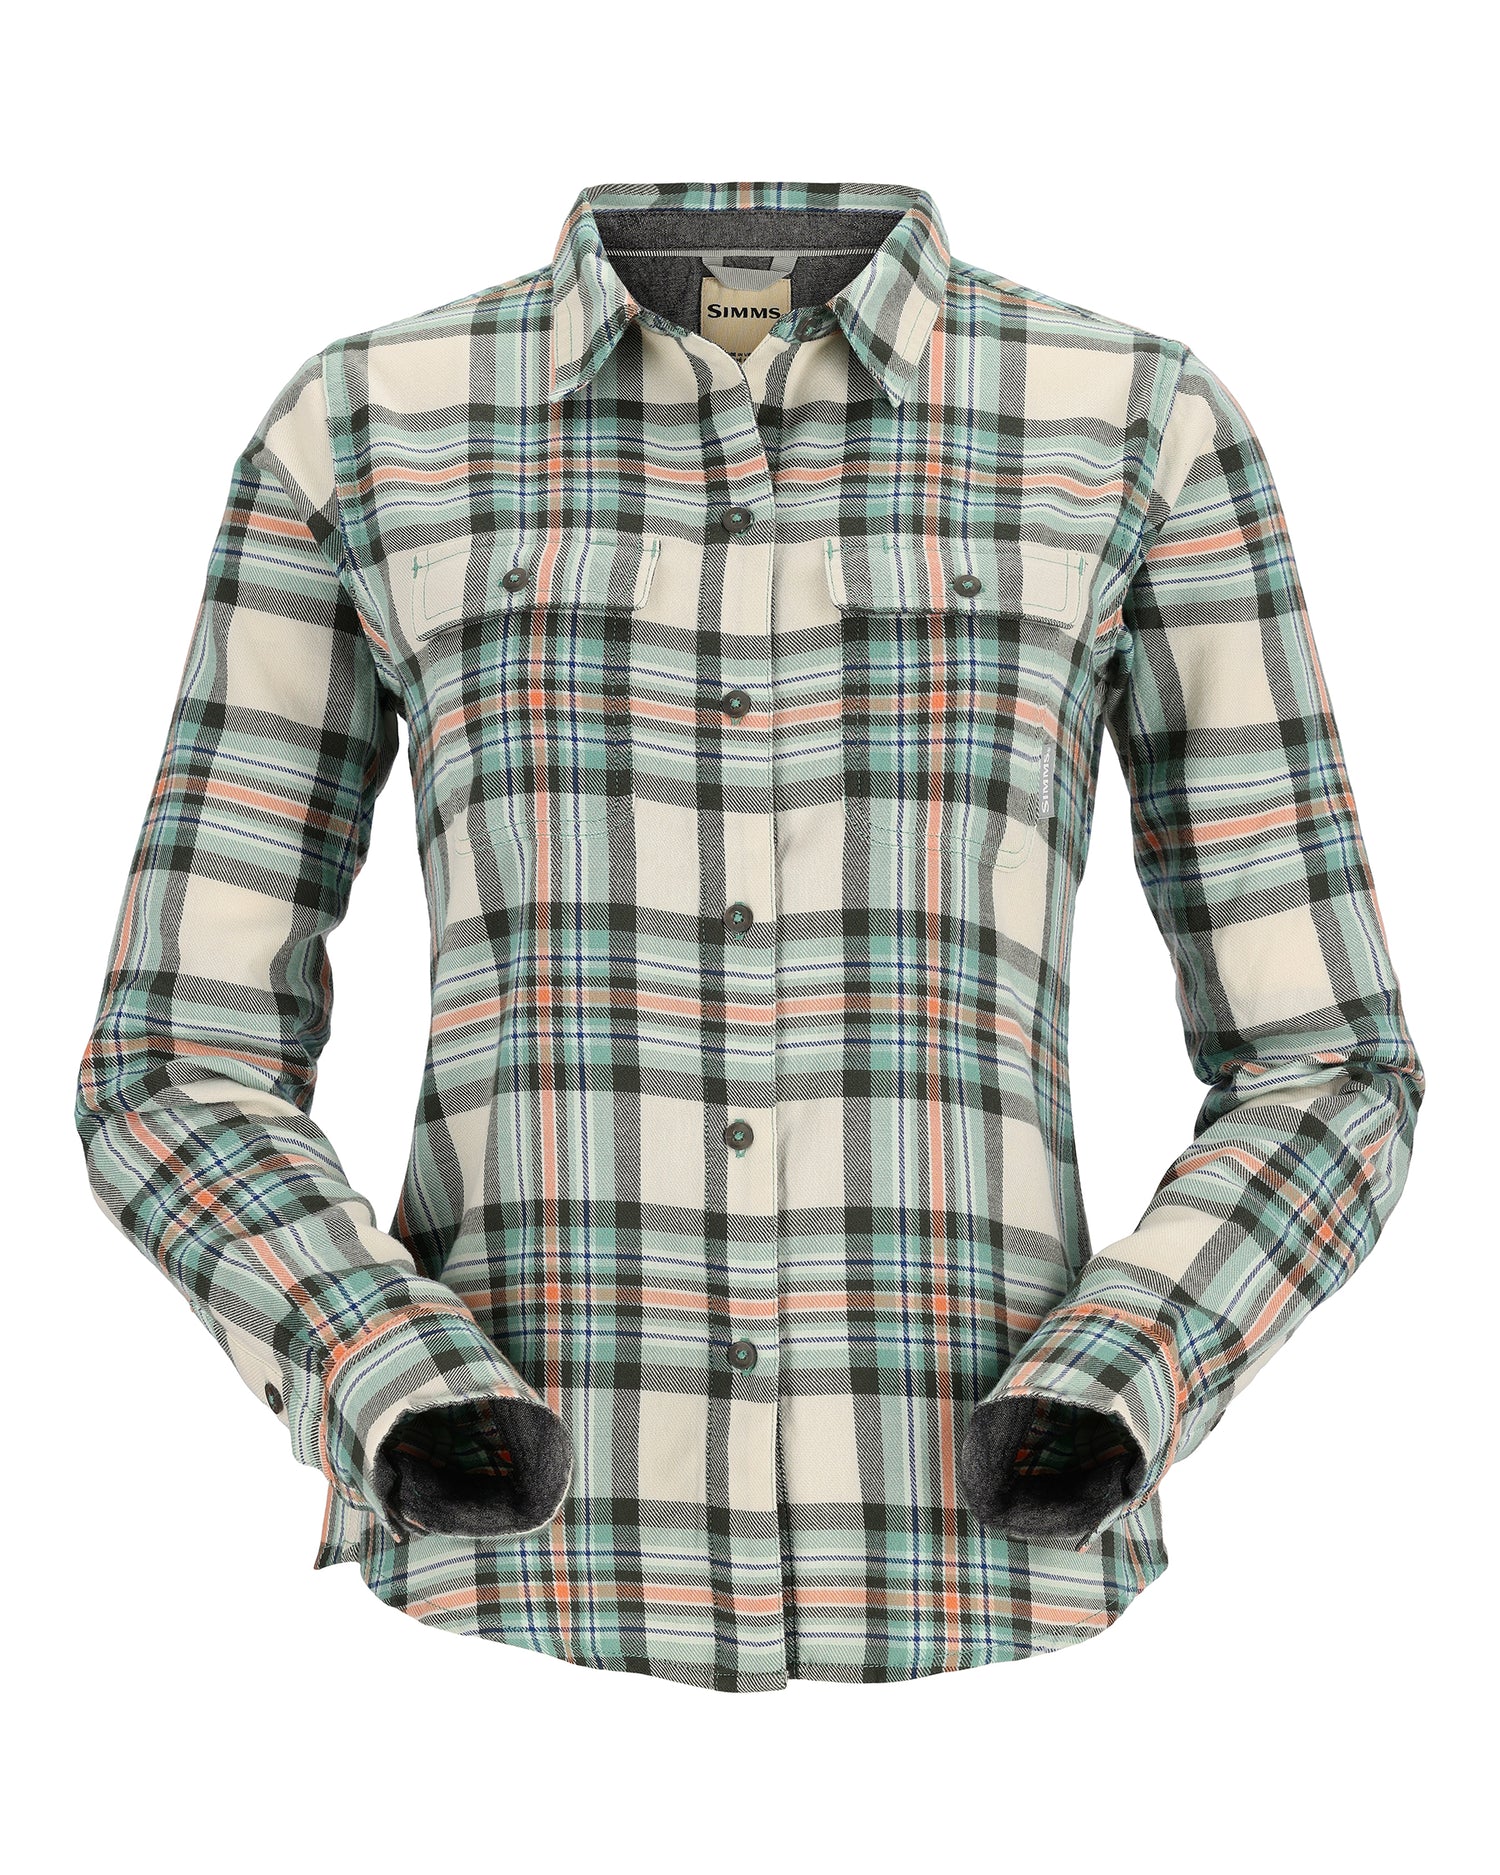 13567-657-santee-flannel-shirt-on-mannequin